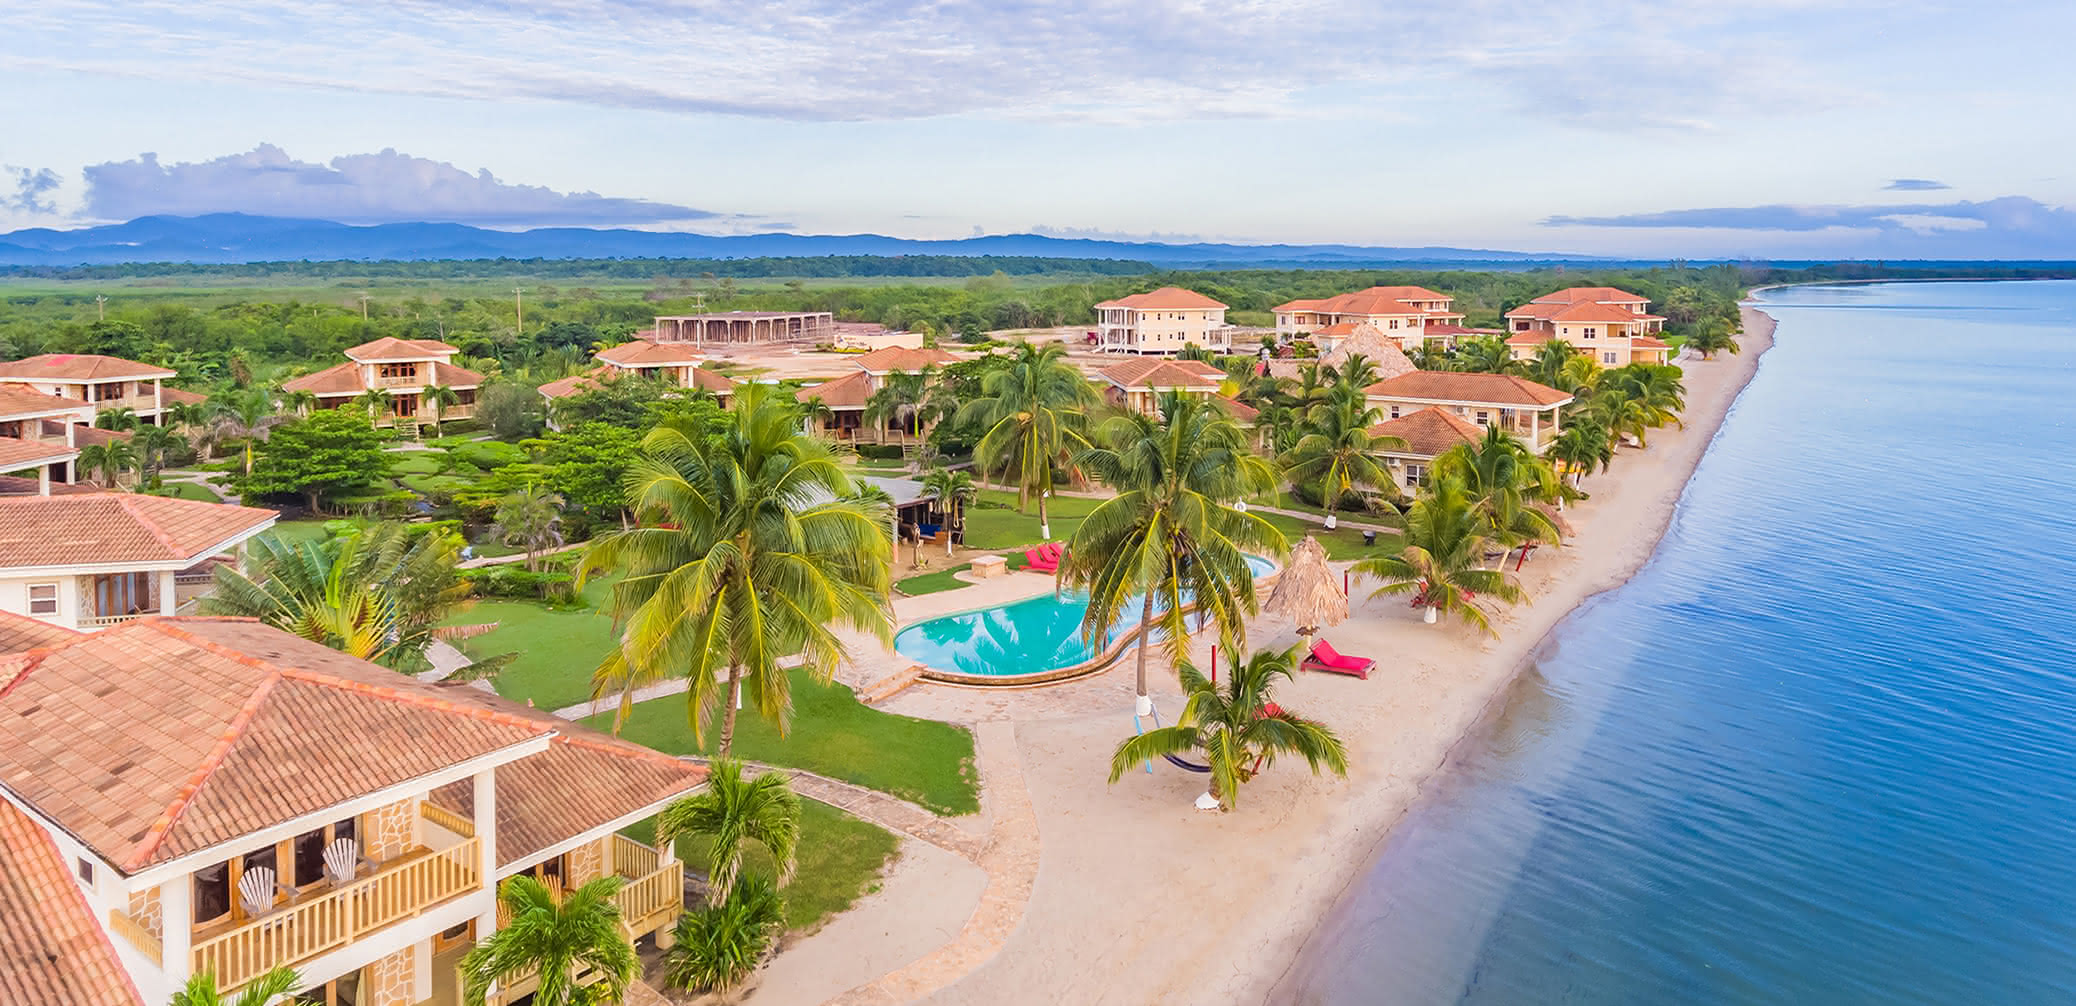 Review: Hopkins Bay Resort Belize